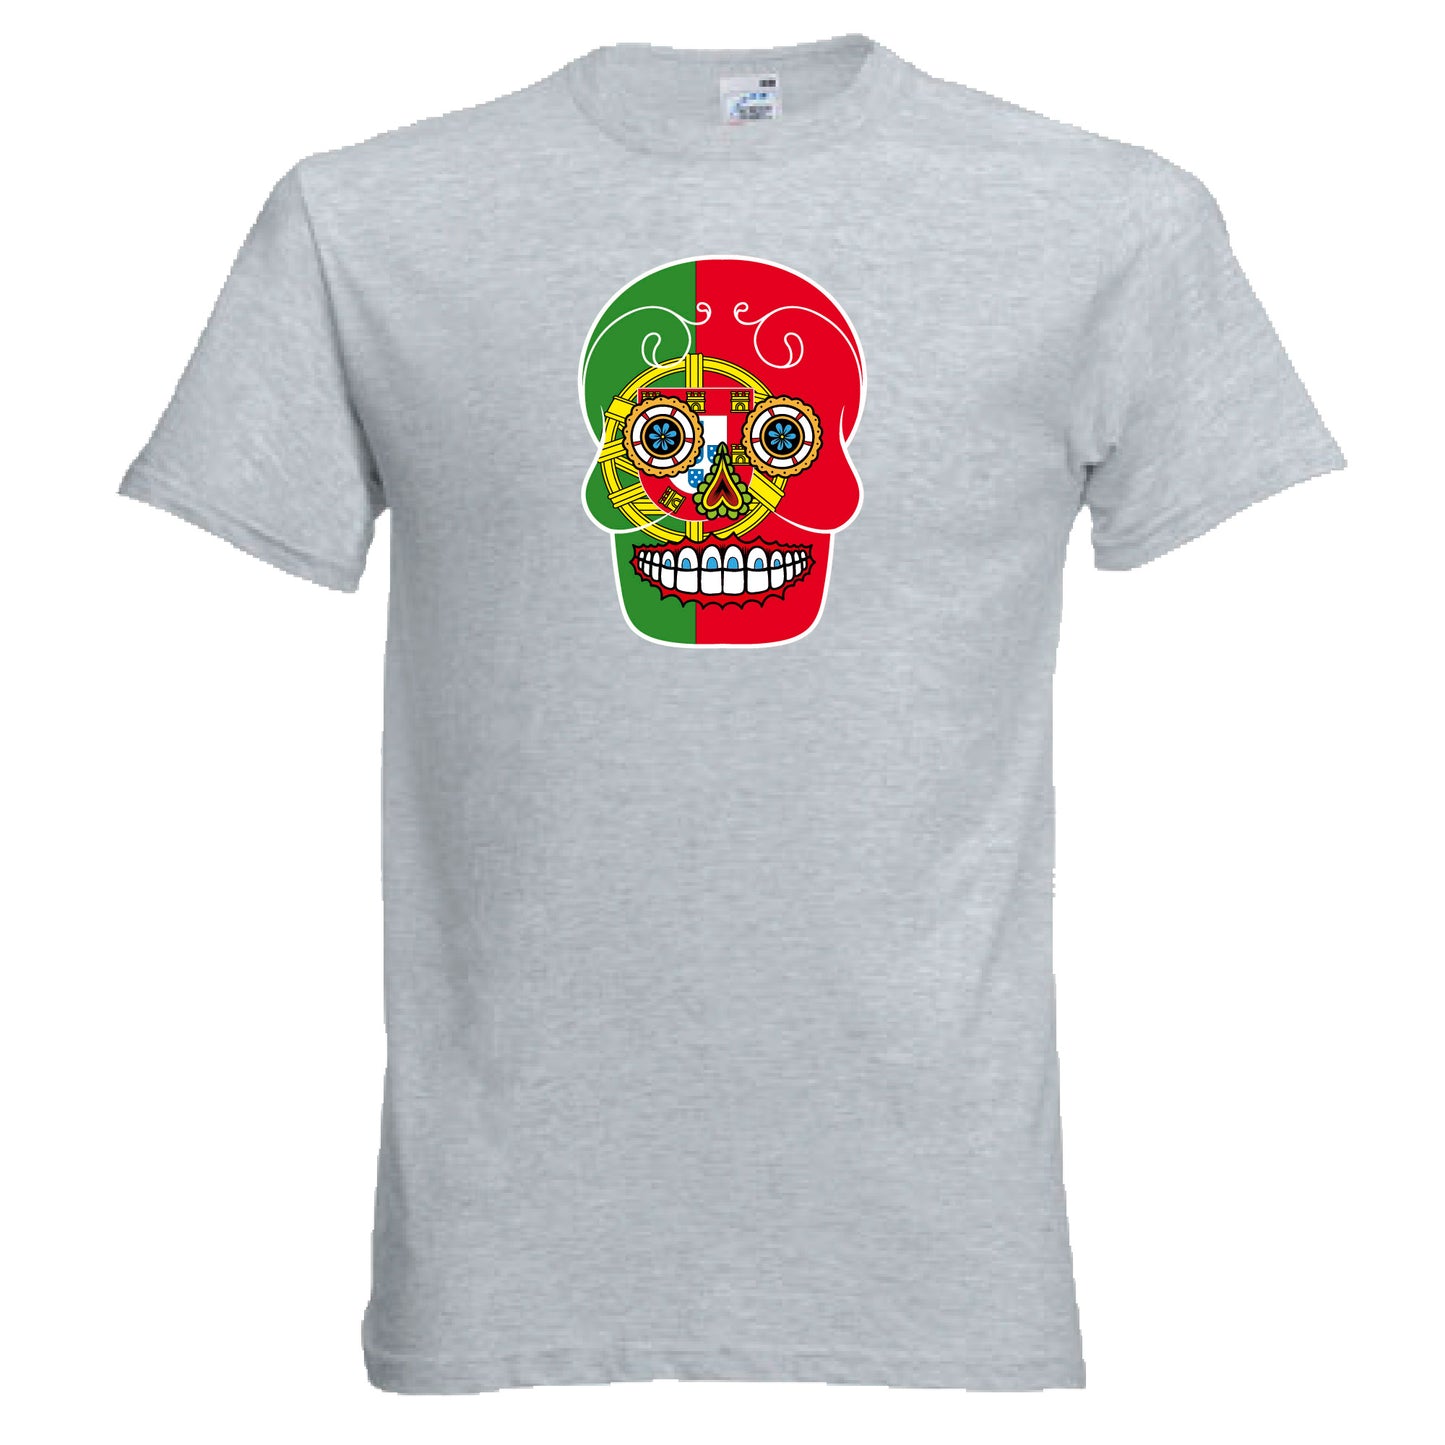 INDIGOS UG - T-Shirt Herren - Portugal - Skull - Fussball